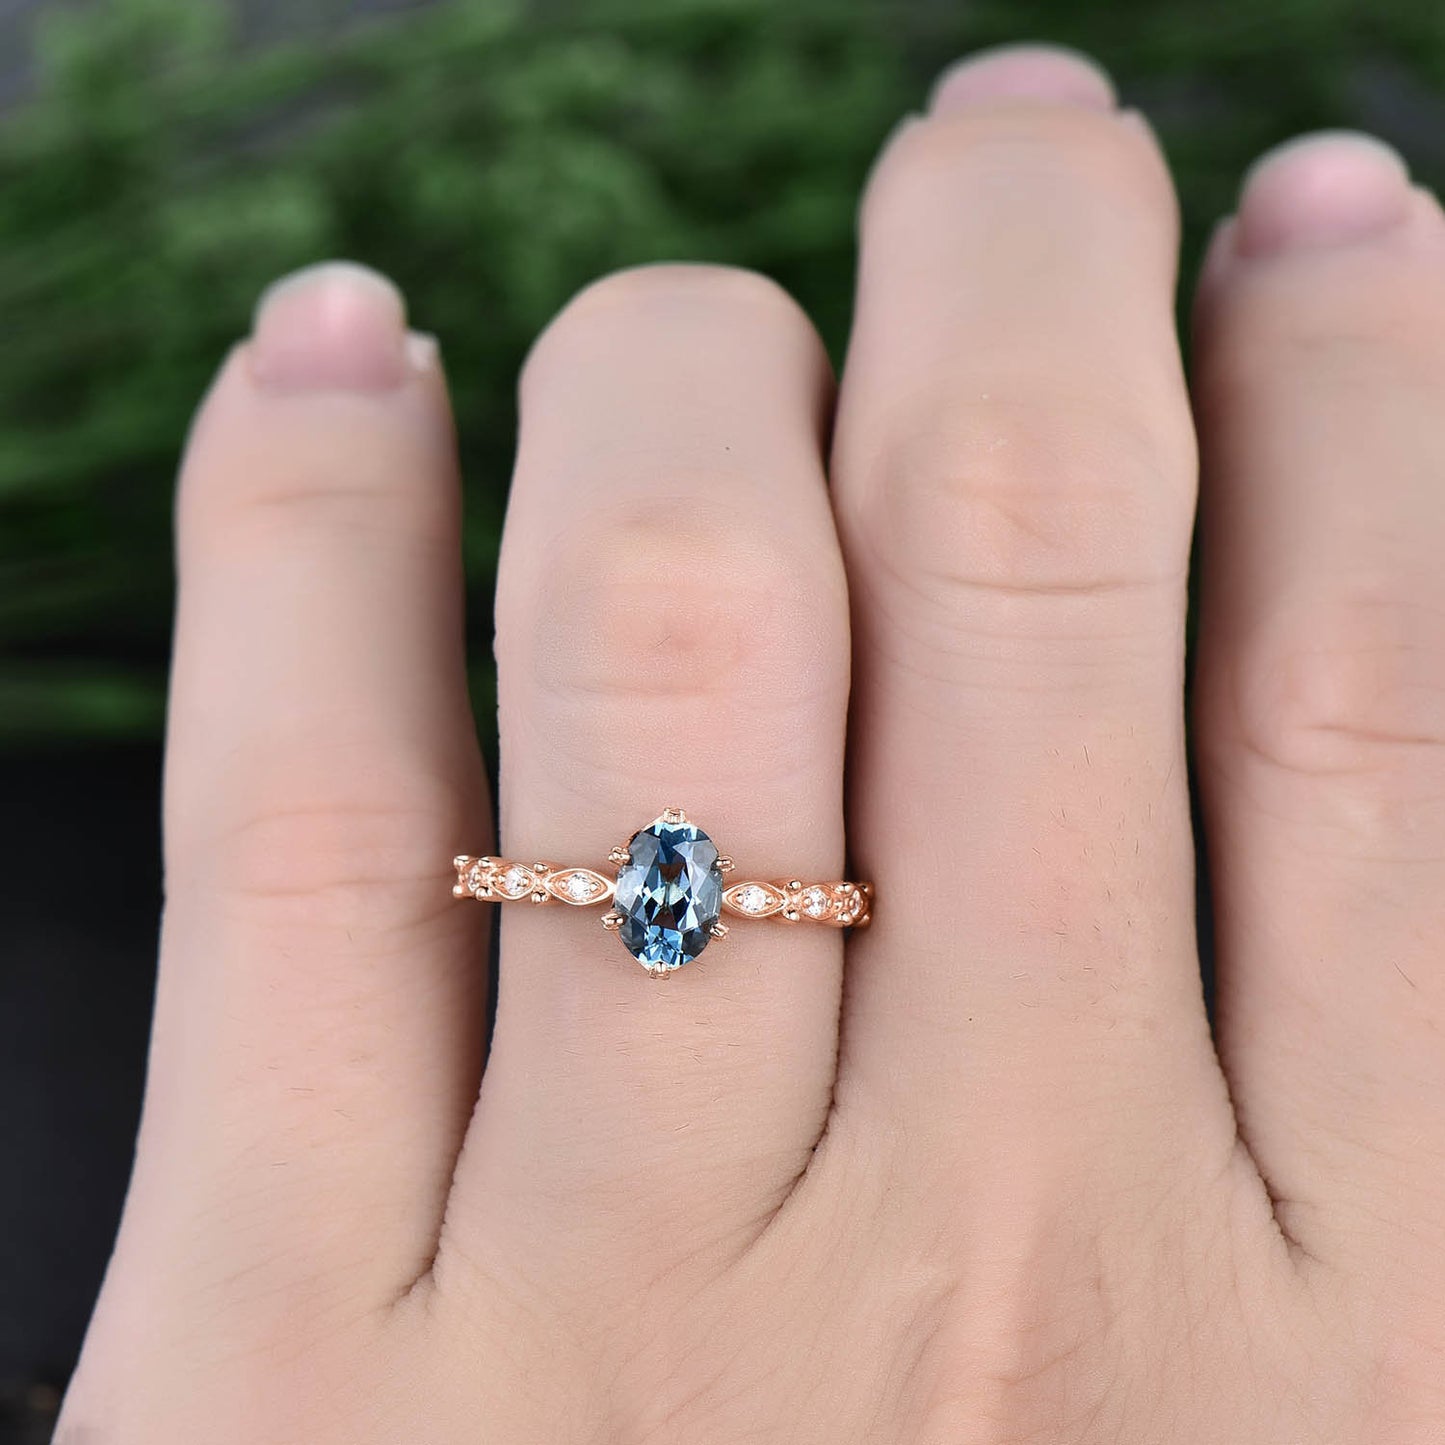 5x7mm oval cut London blue topaz engagement ring solid rose gold ring vintage topaz ring art deco moissanite ring birthday gift for her